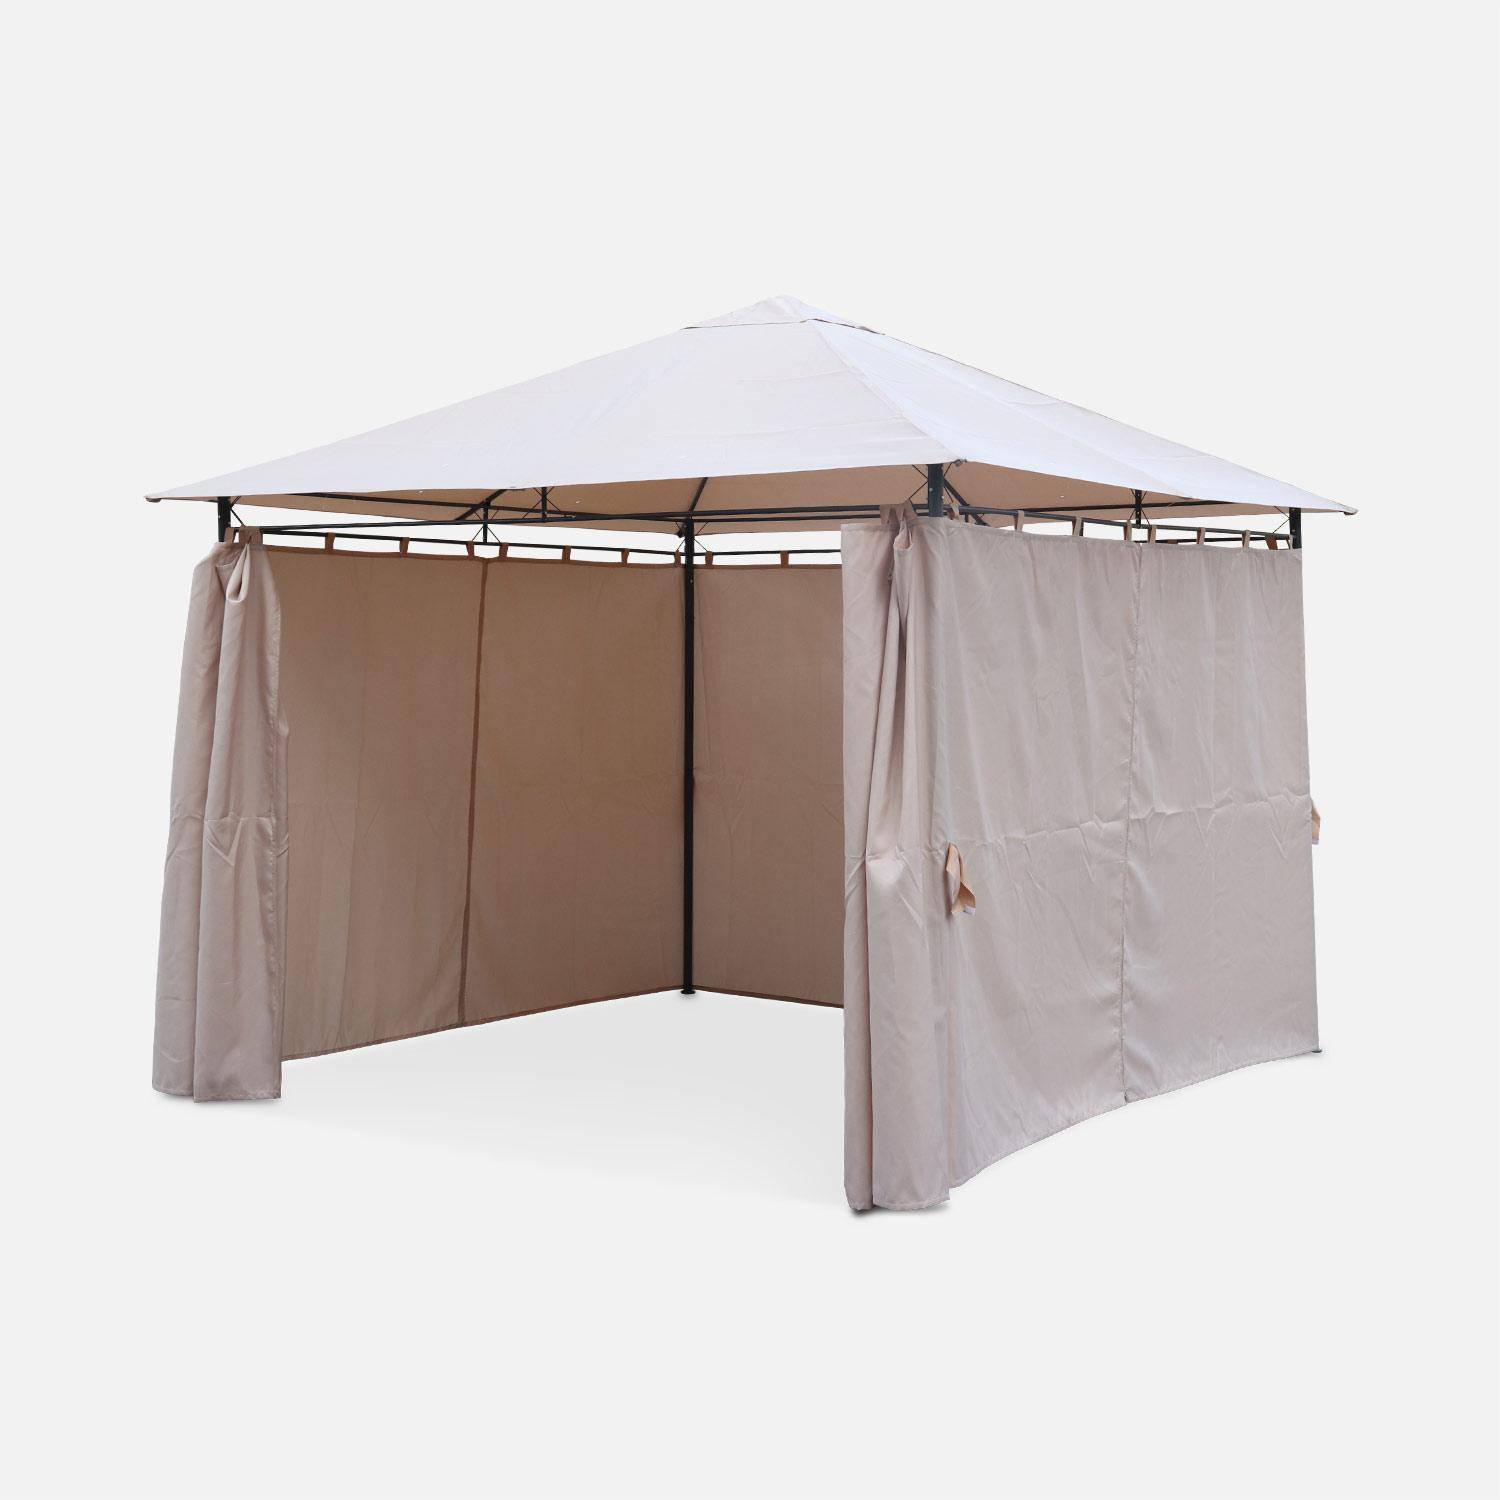 Pergolato 3x3 m - Elusa - Telo beige - Pergola con tende, tenda da giardino, barnum, tensostruttura, ricevimento Photo2